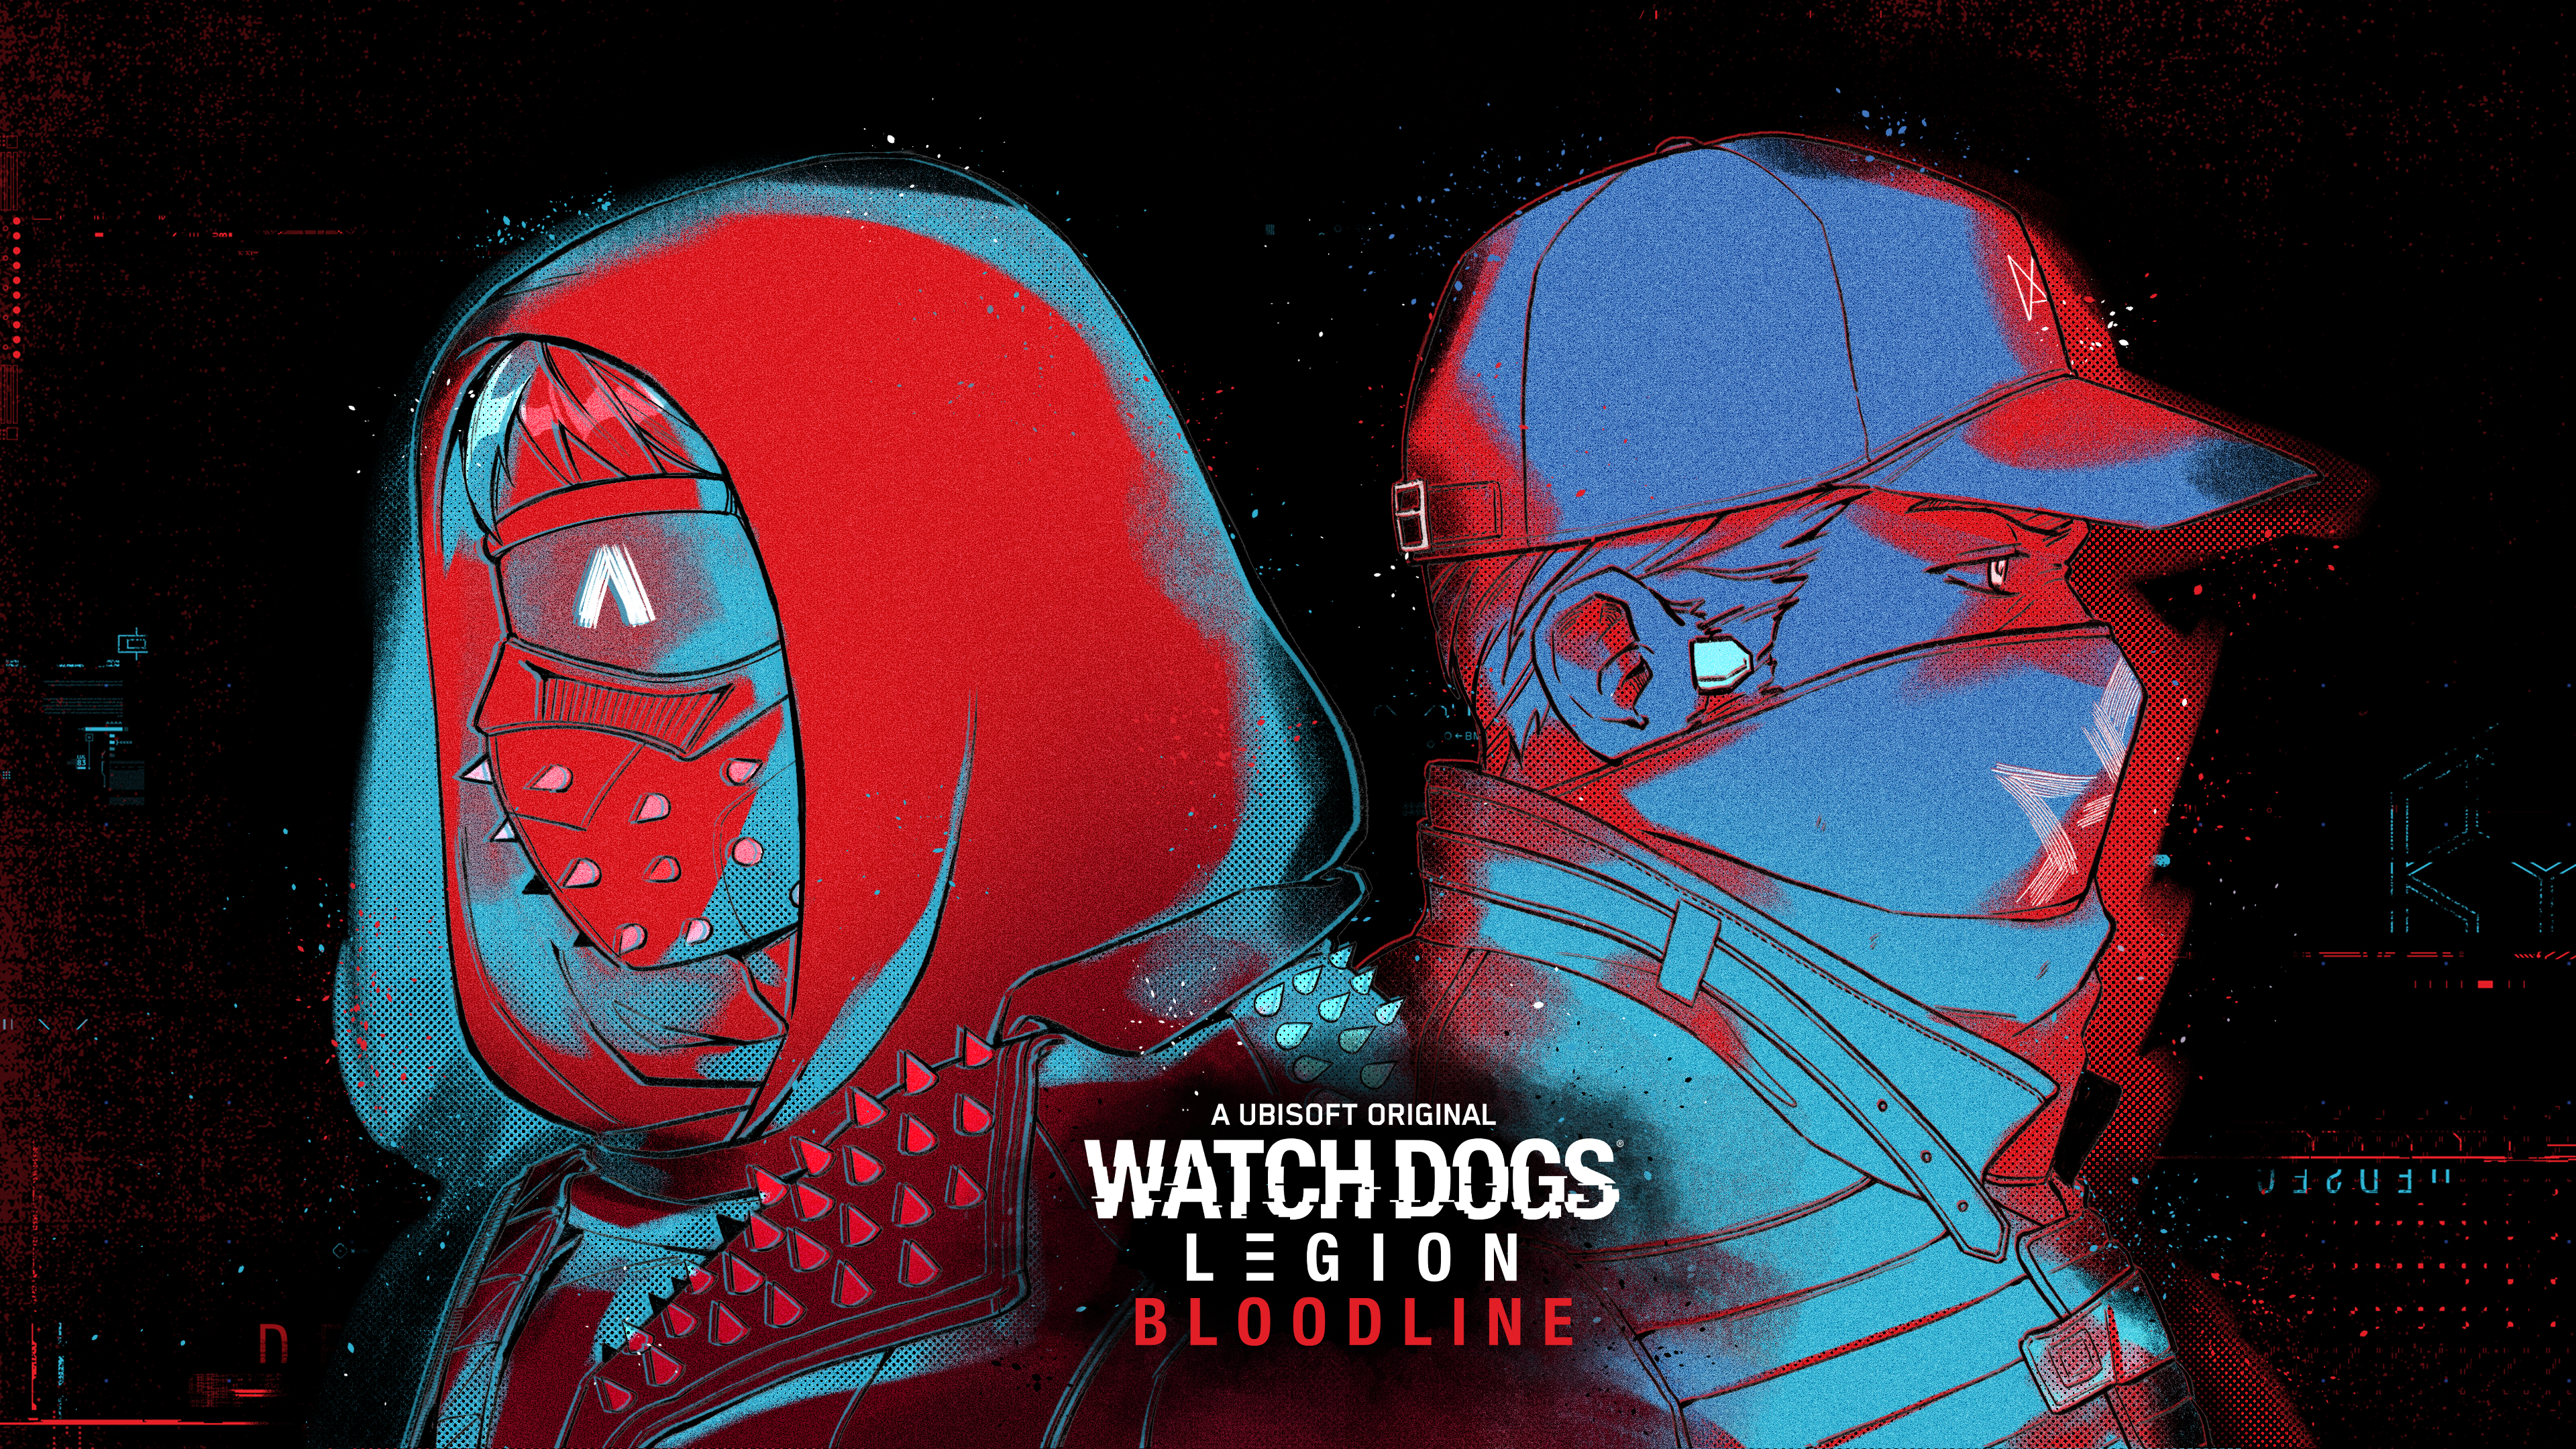 Watch Dogs: Legion Bloodline is better for having proper